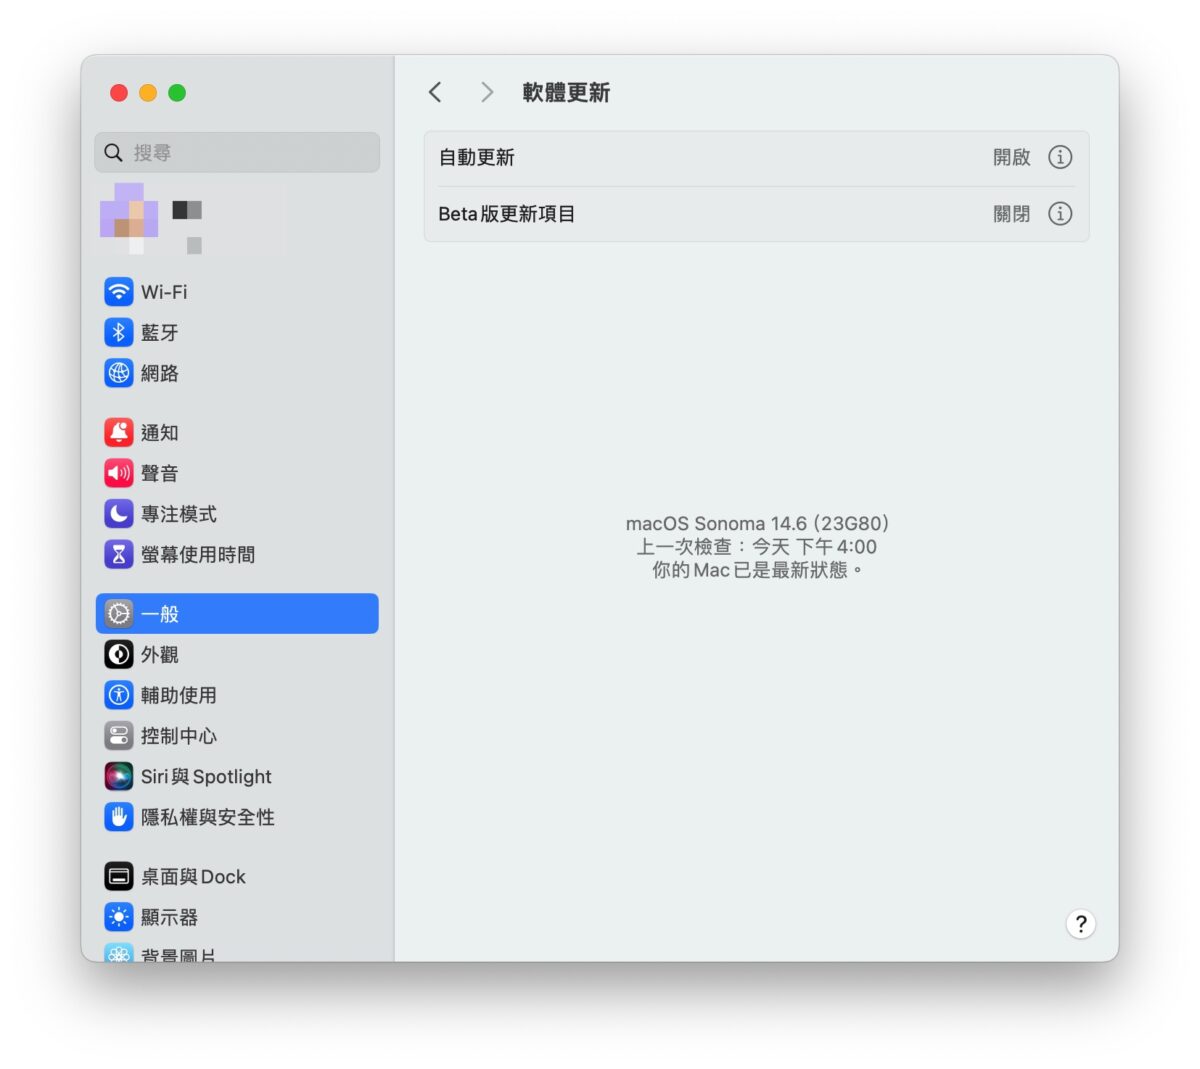 Mac macOS macOS 14 macOS Sonoma macOS 14.6 外接雙螢幕 M3 MacBook Pro 雙螢幕 M3 MacBook Pro 外接雙螢幕